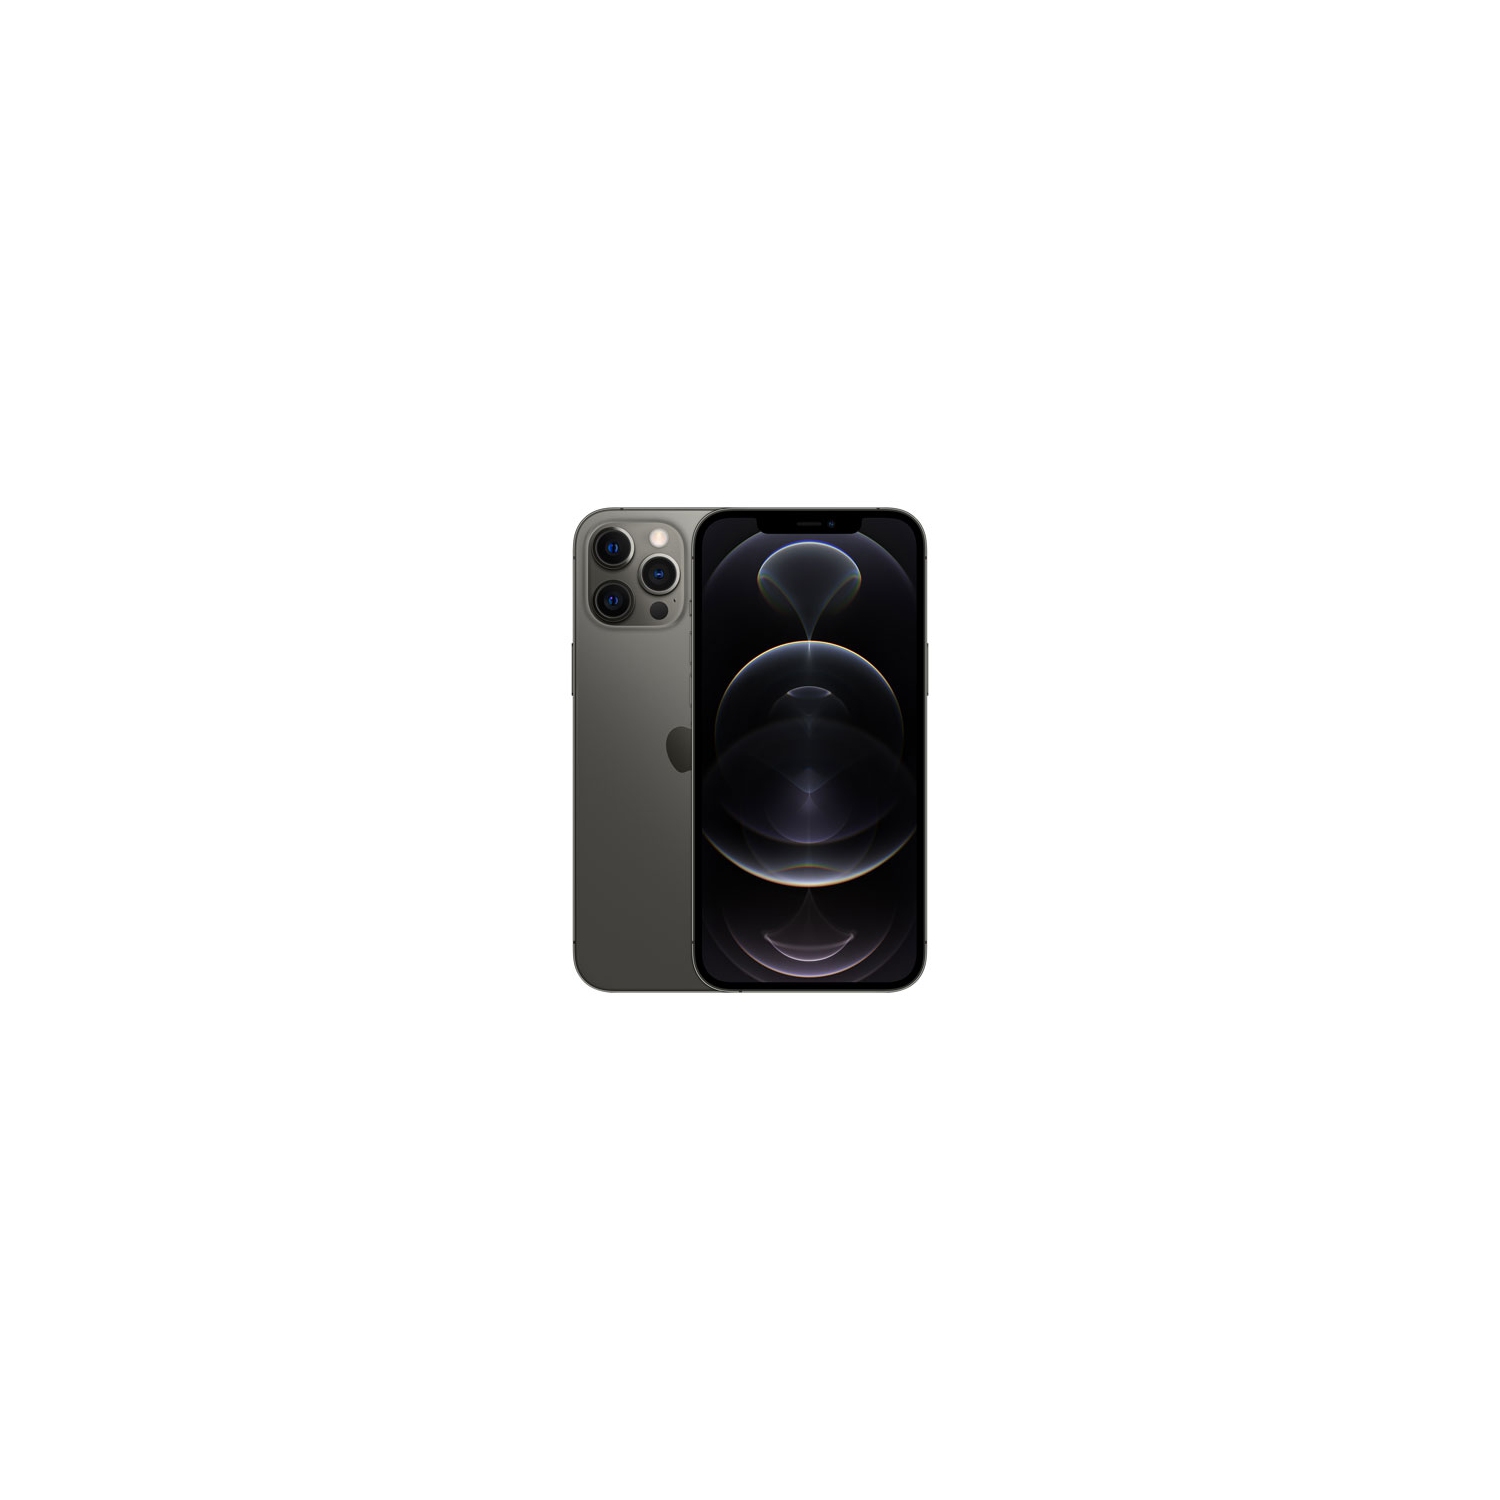 Apple iPhone 12 Pro Max 256GB Smartphone - Graphite - Unlocked - Open Box